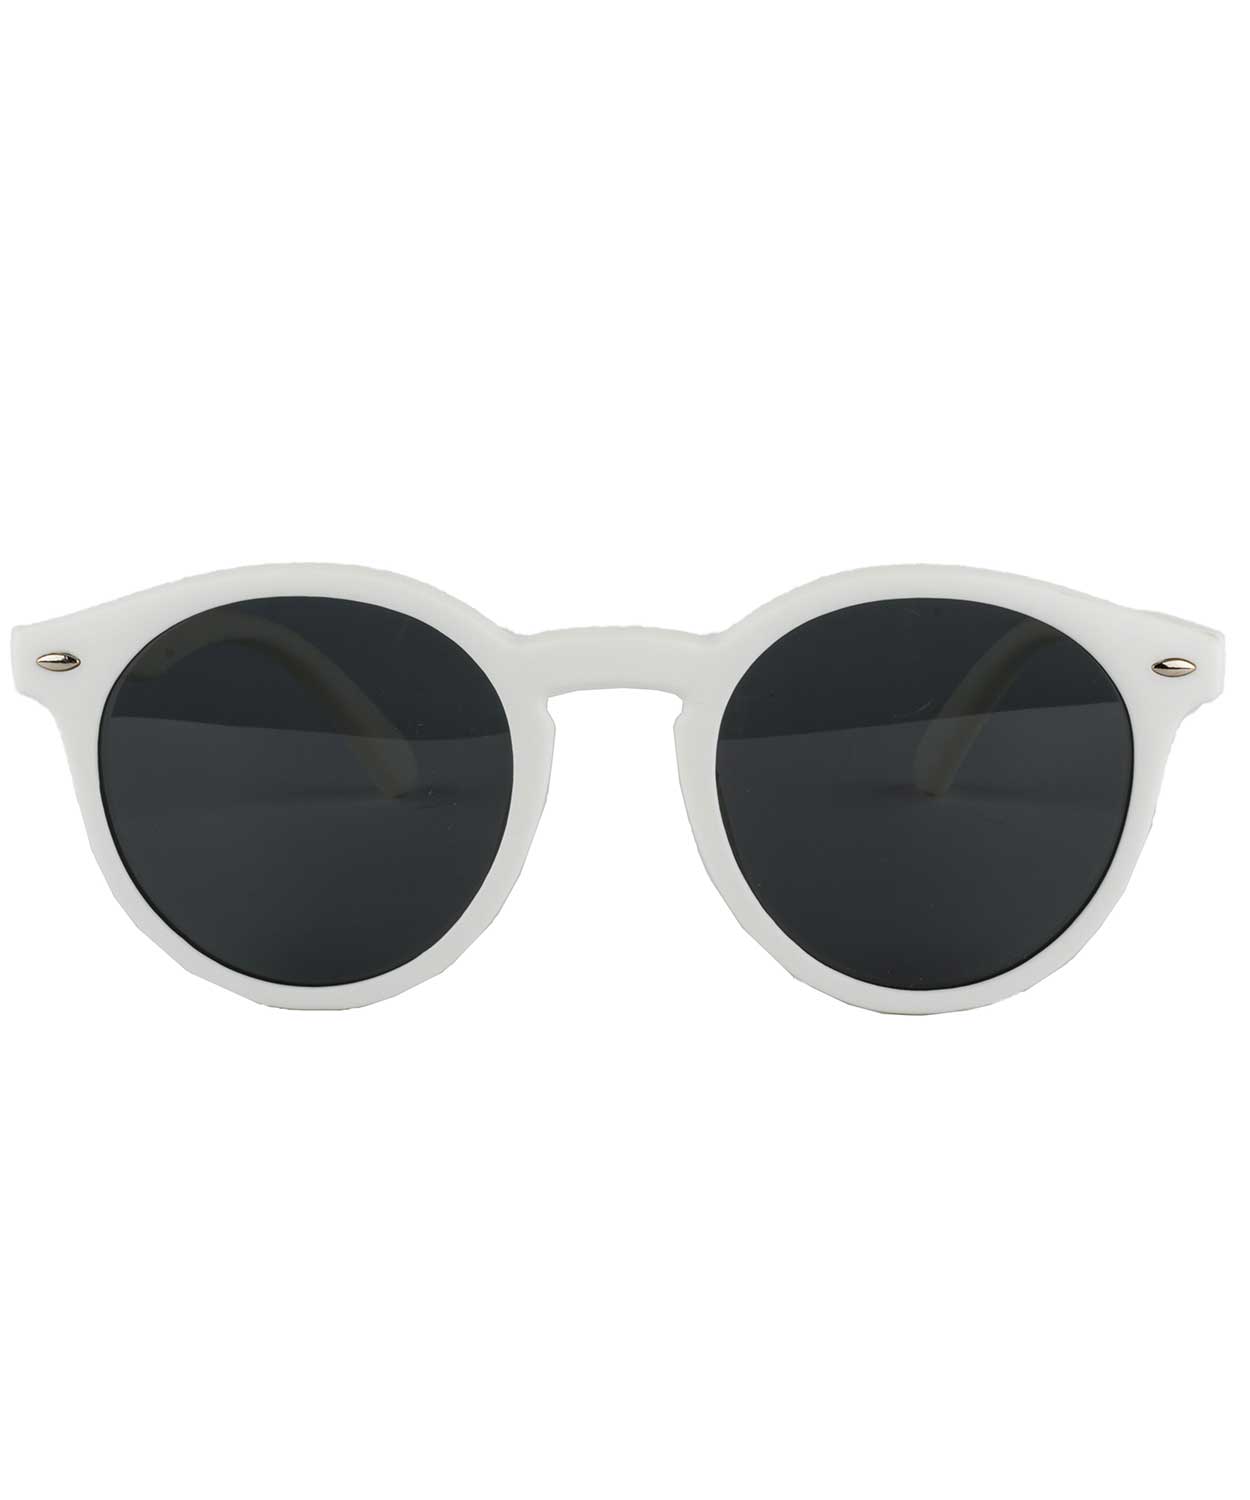 Coolsunnies Sunglasses 6-026